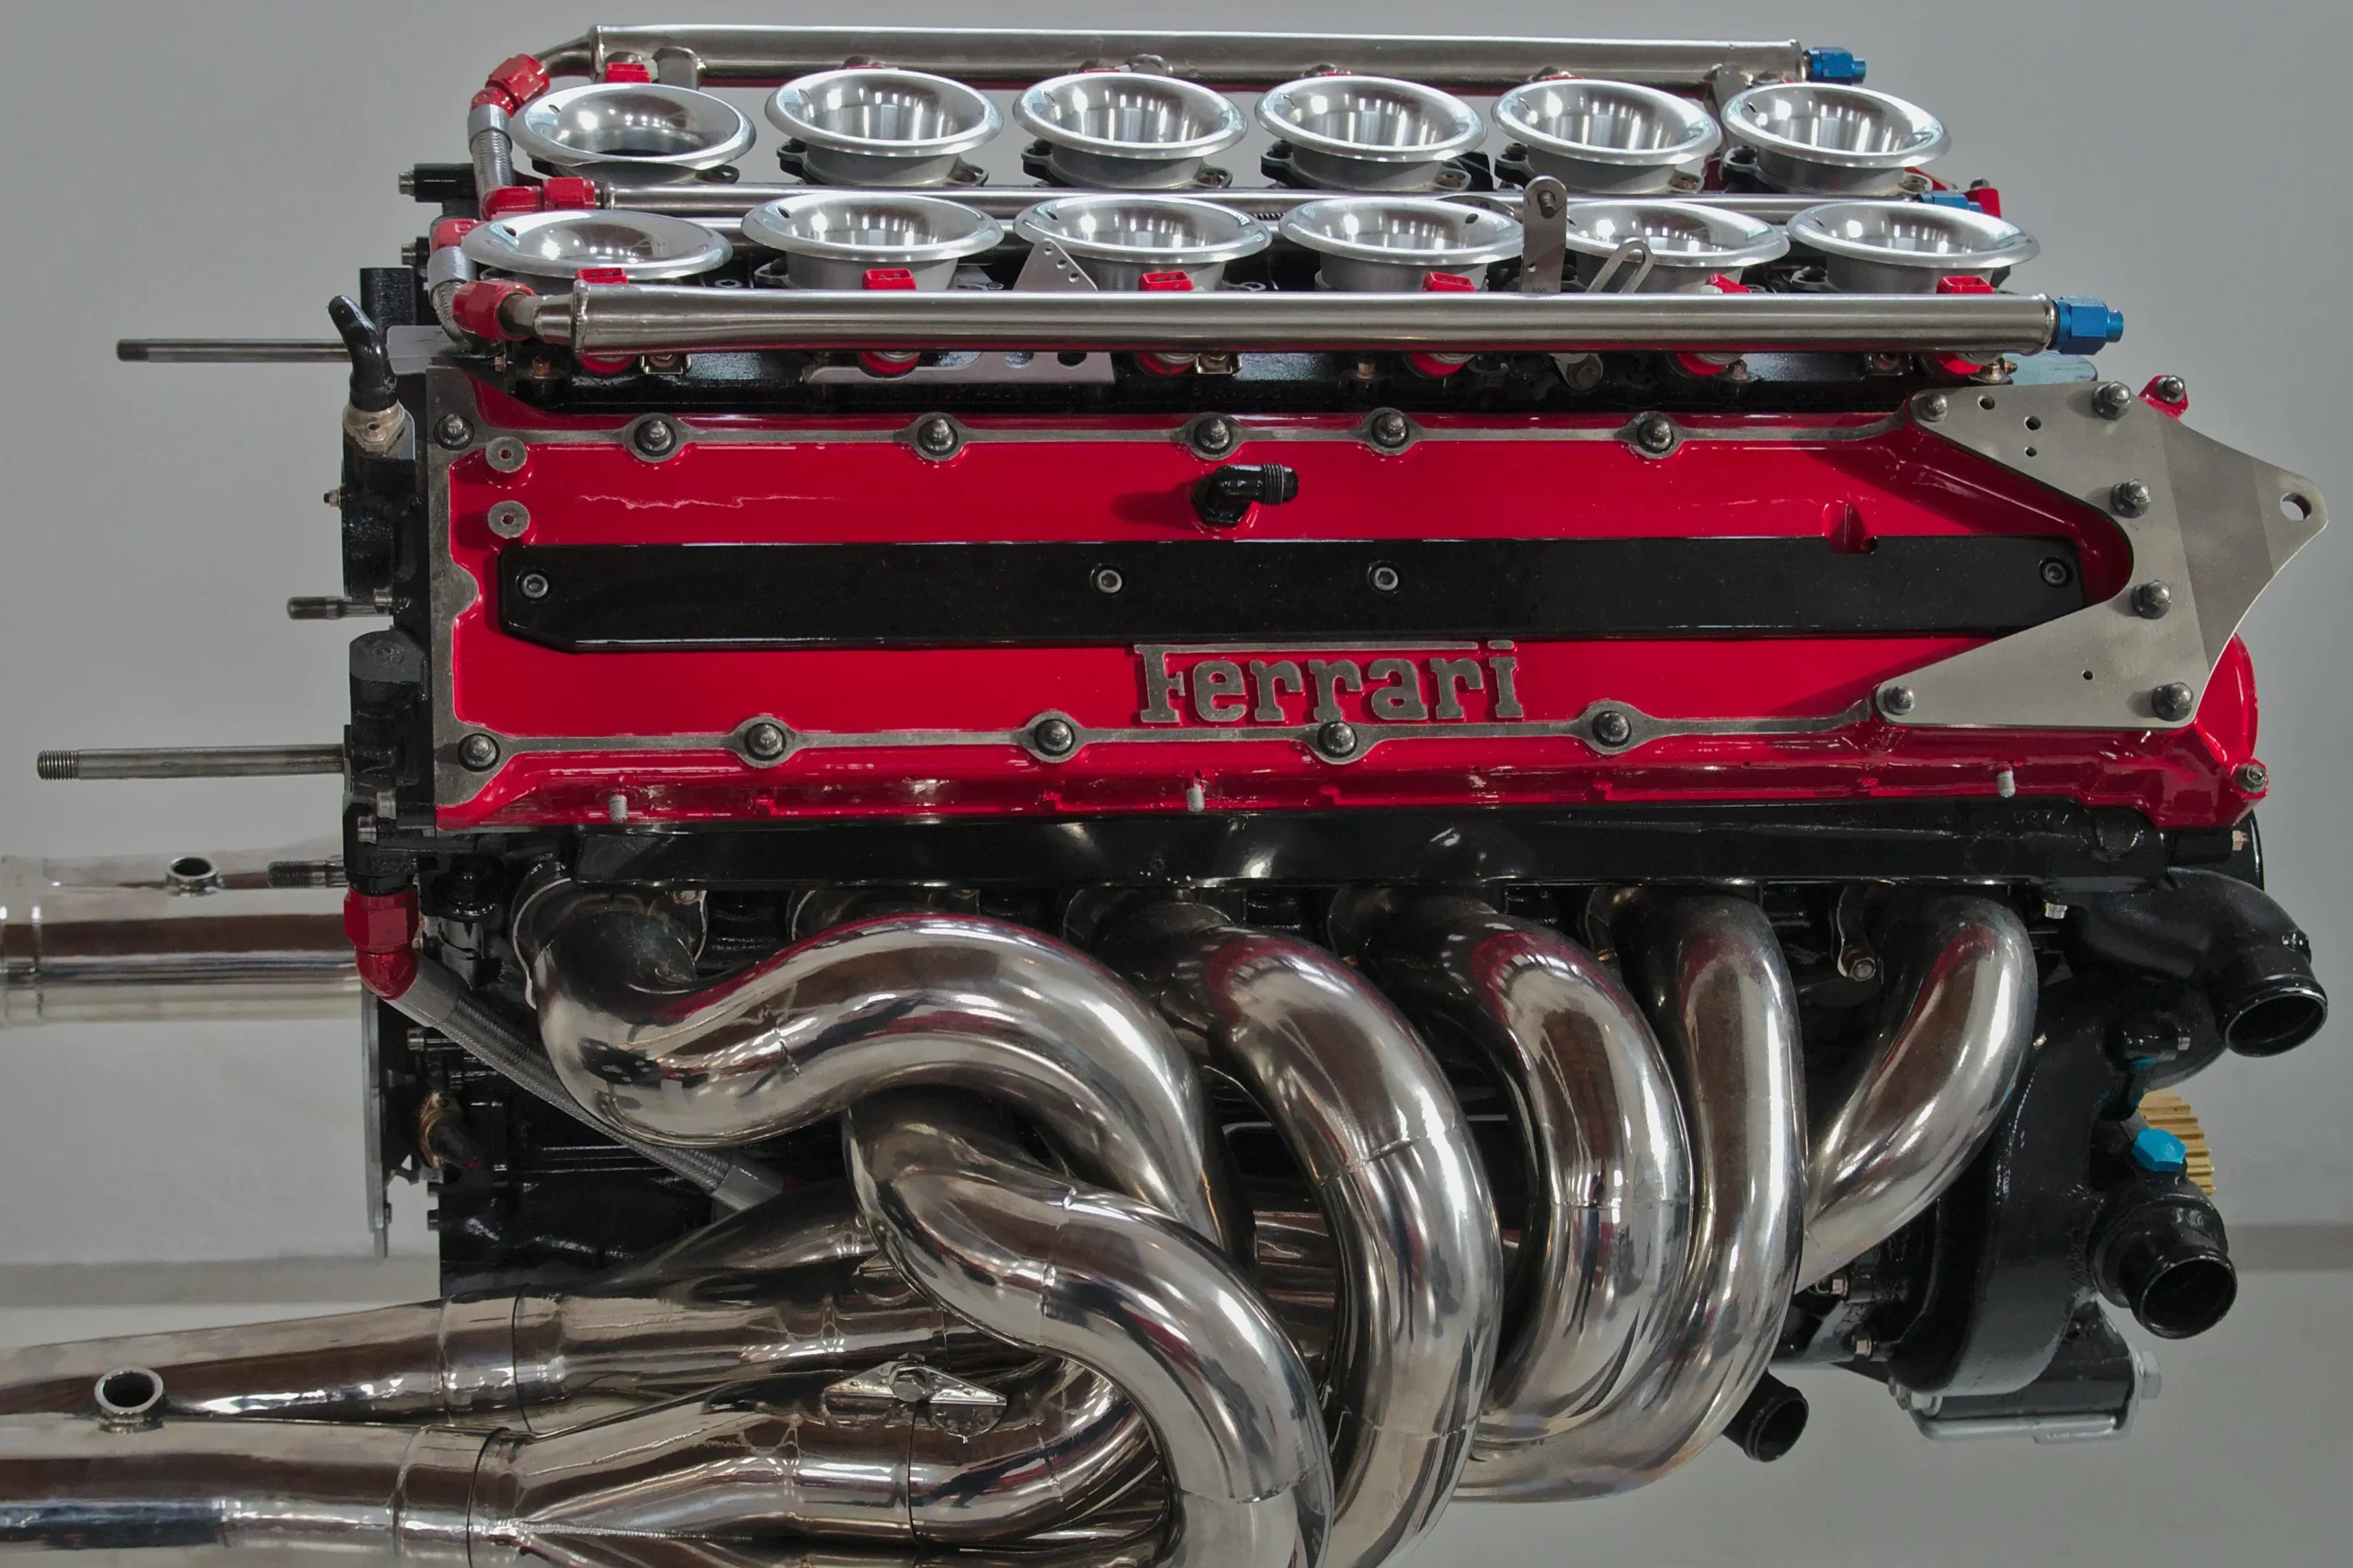 ferrari f1 v12 engine - What was the last F1 V12 engine